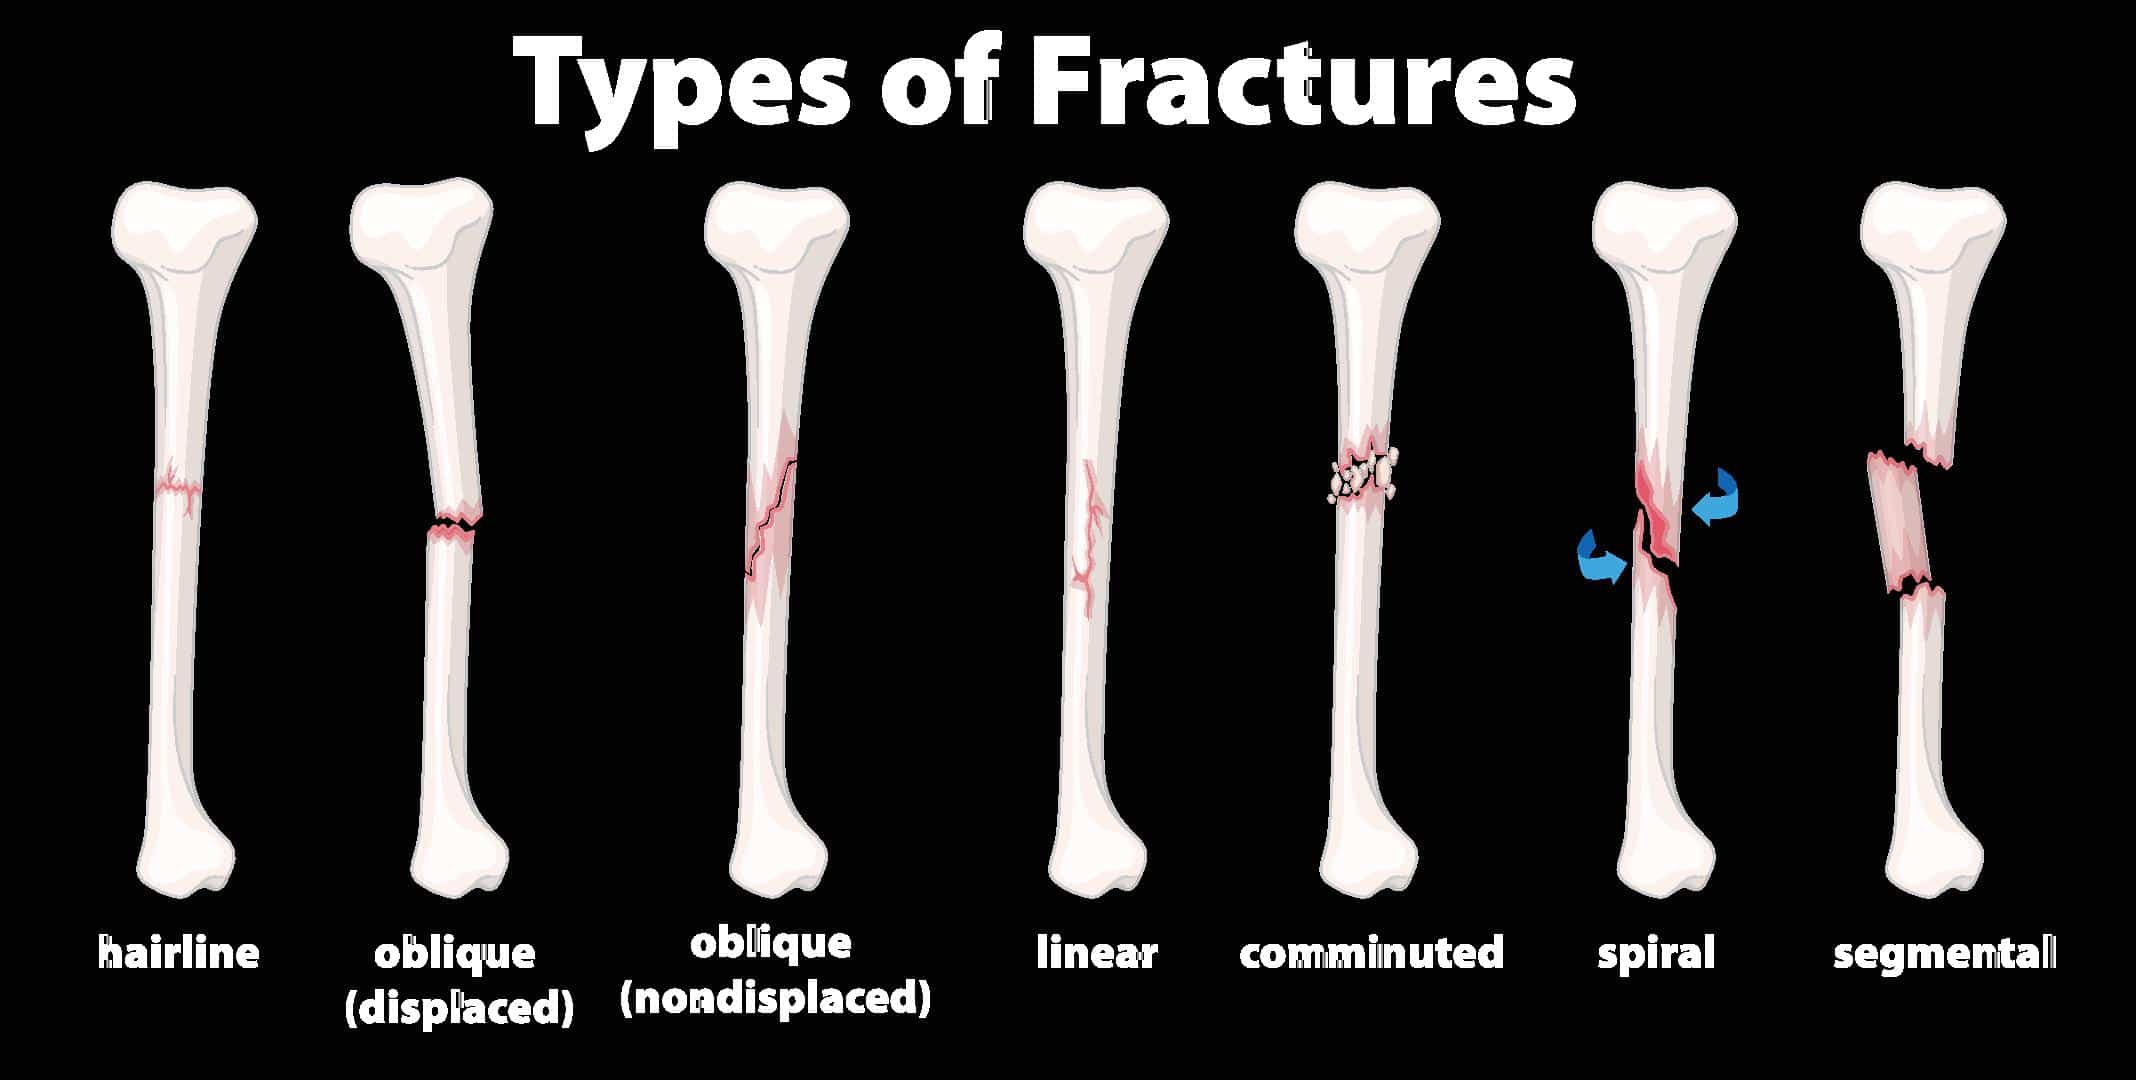 Types of Bone Fractures